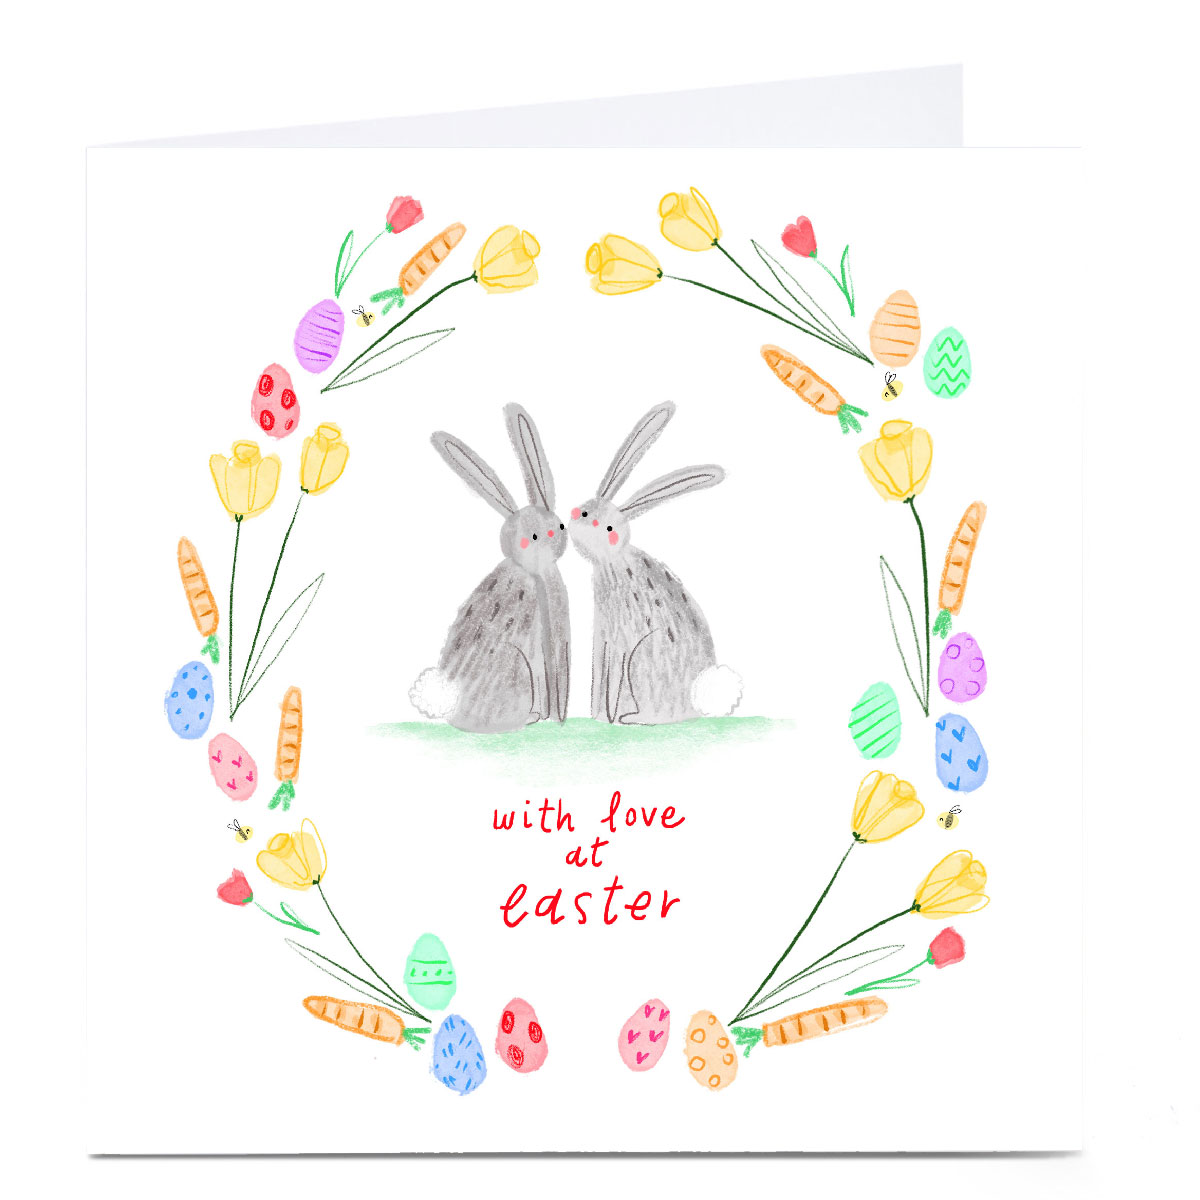 Personalised Emma Valenghi Easter Card - Cute Bunnies